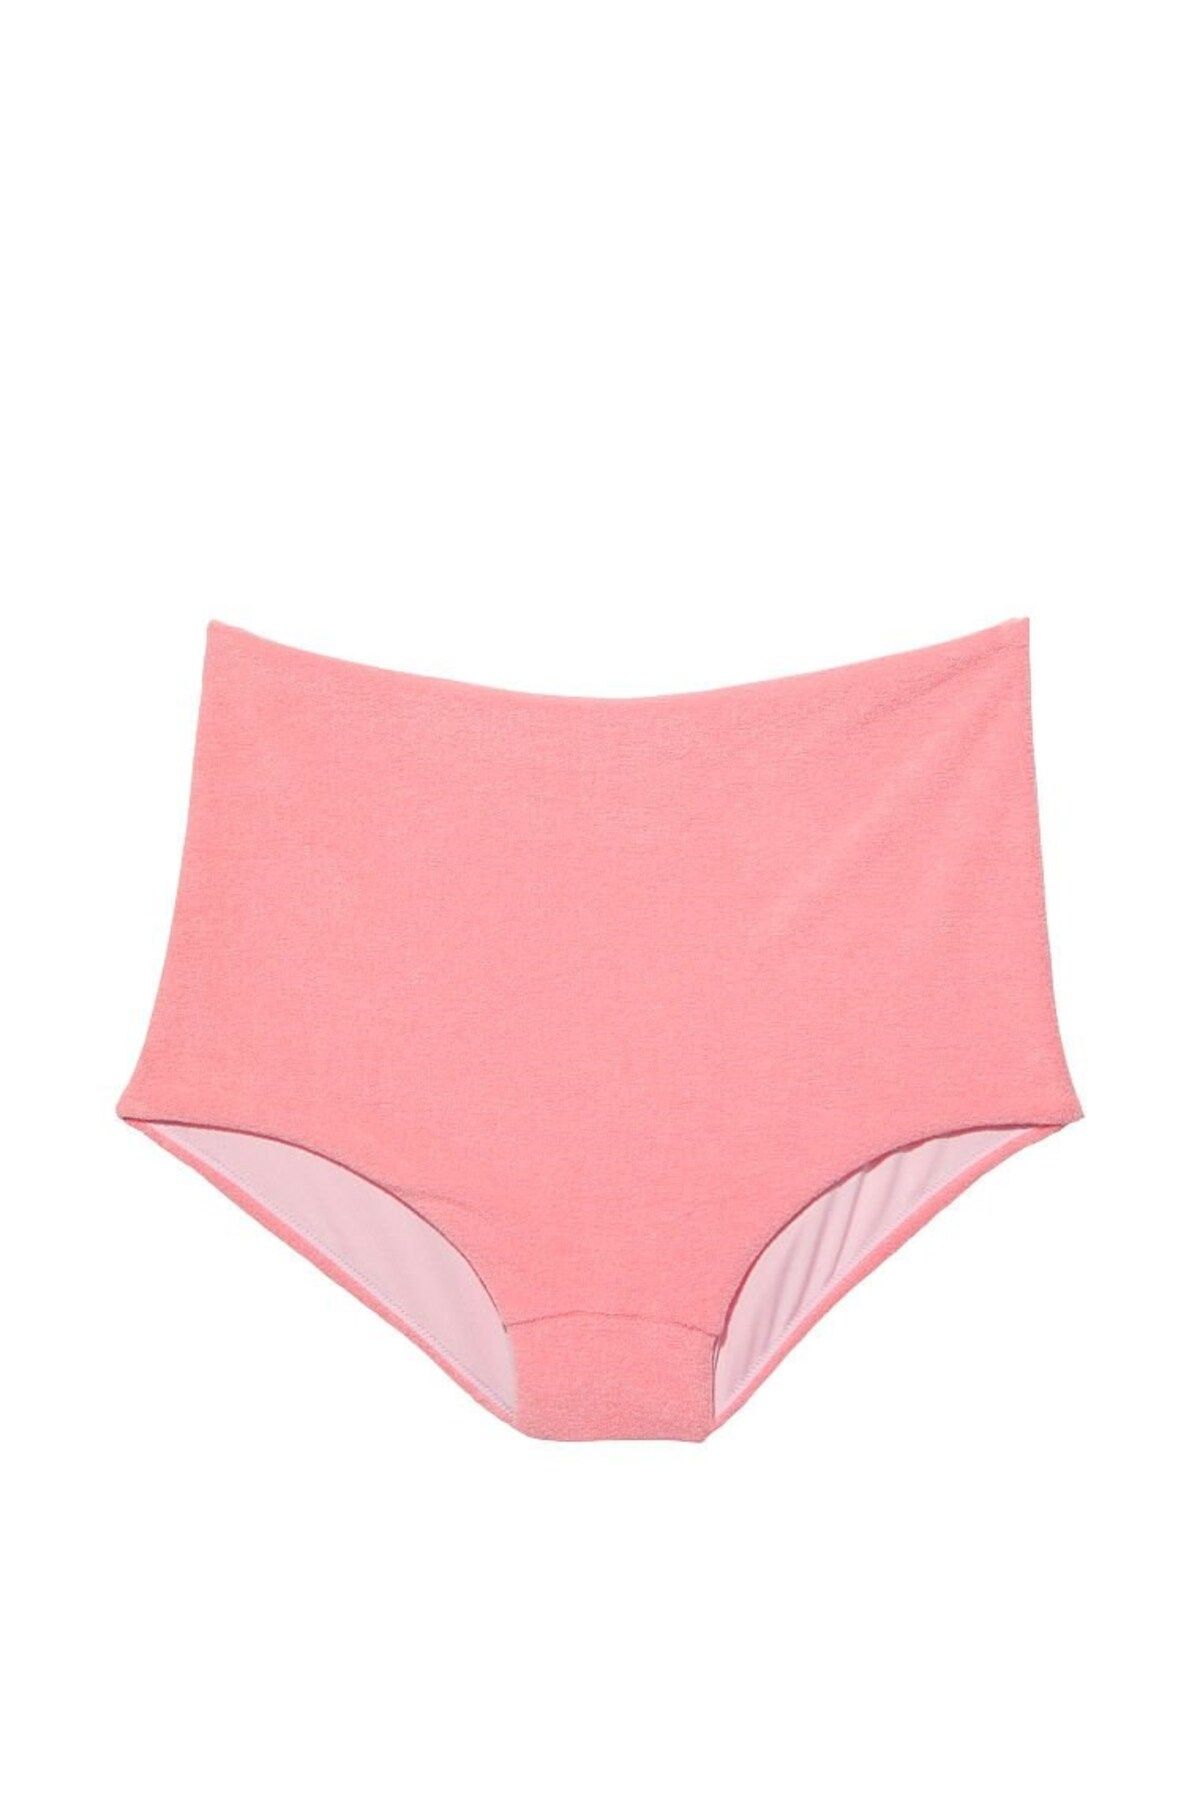 Victoria's Secret Essential Havlu Kumaş Boyshort Model Bikini Altı